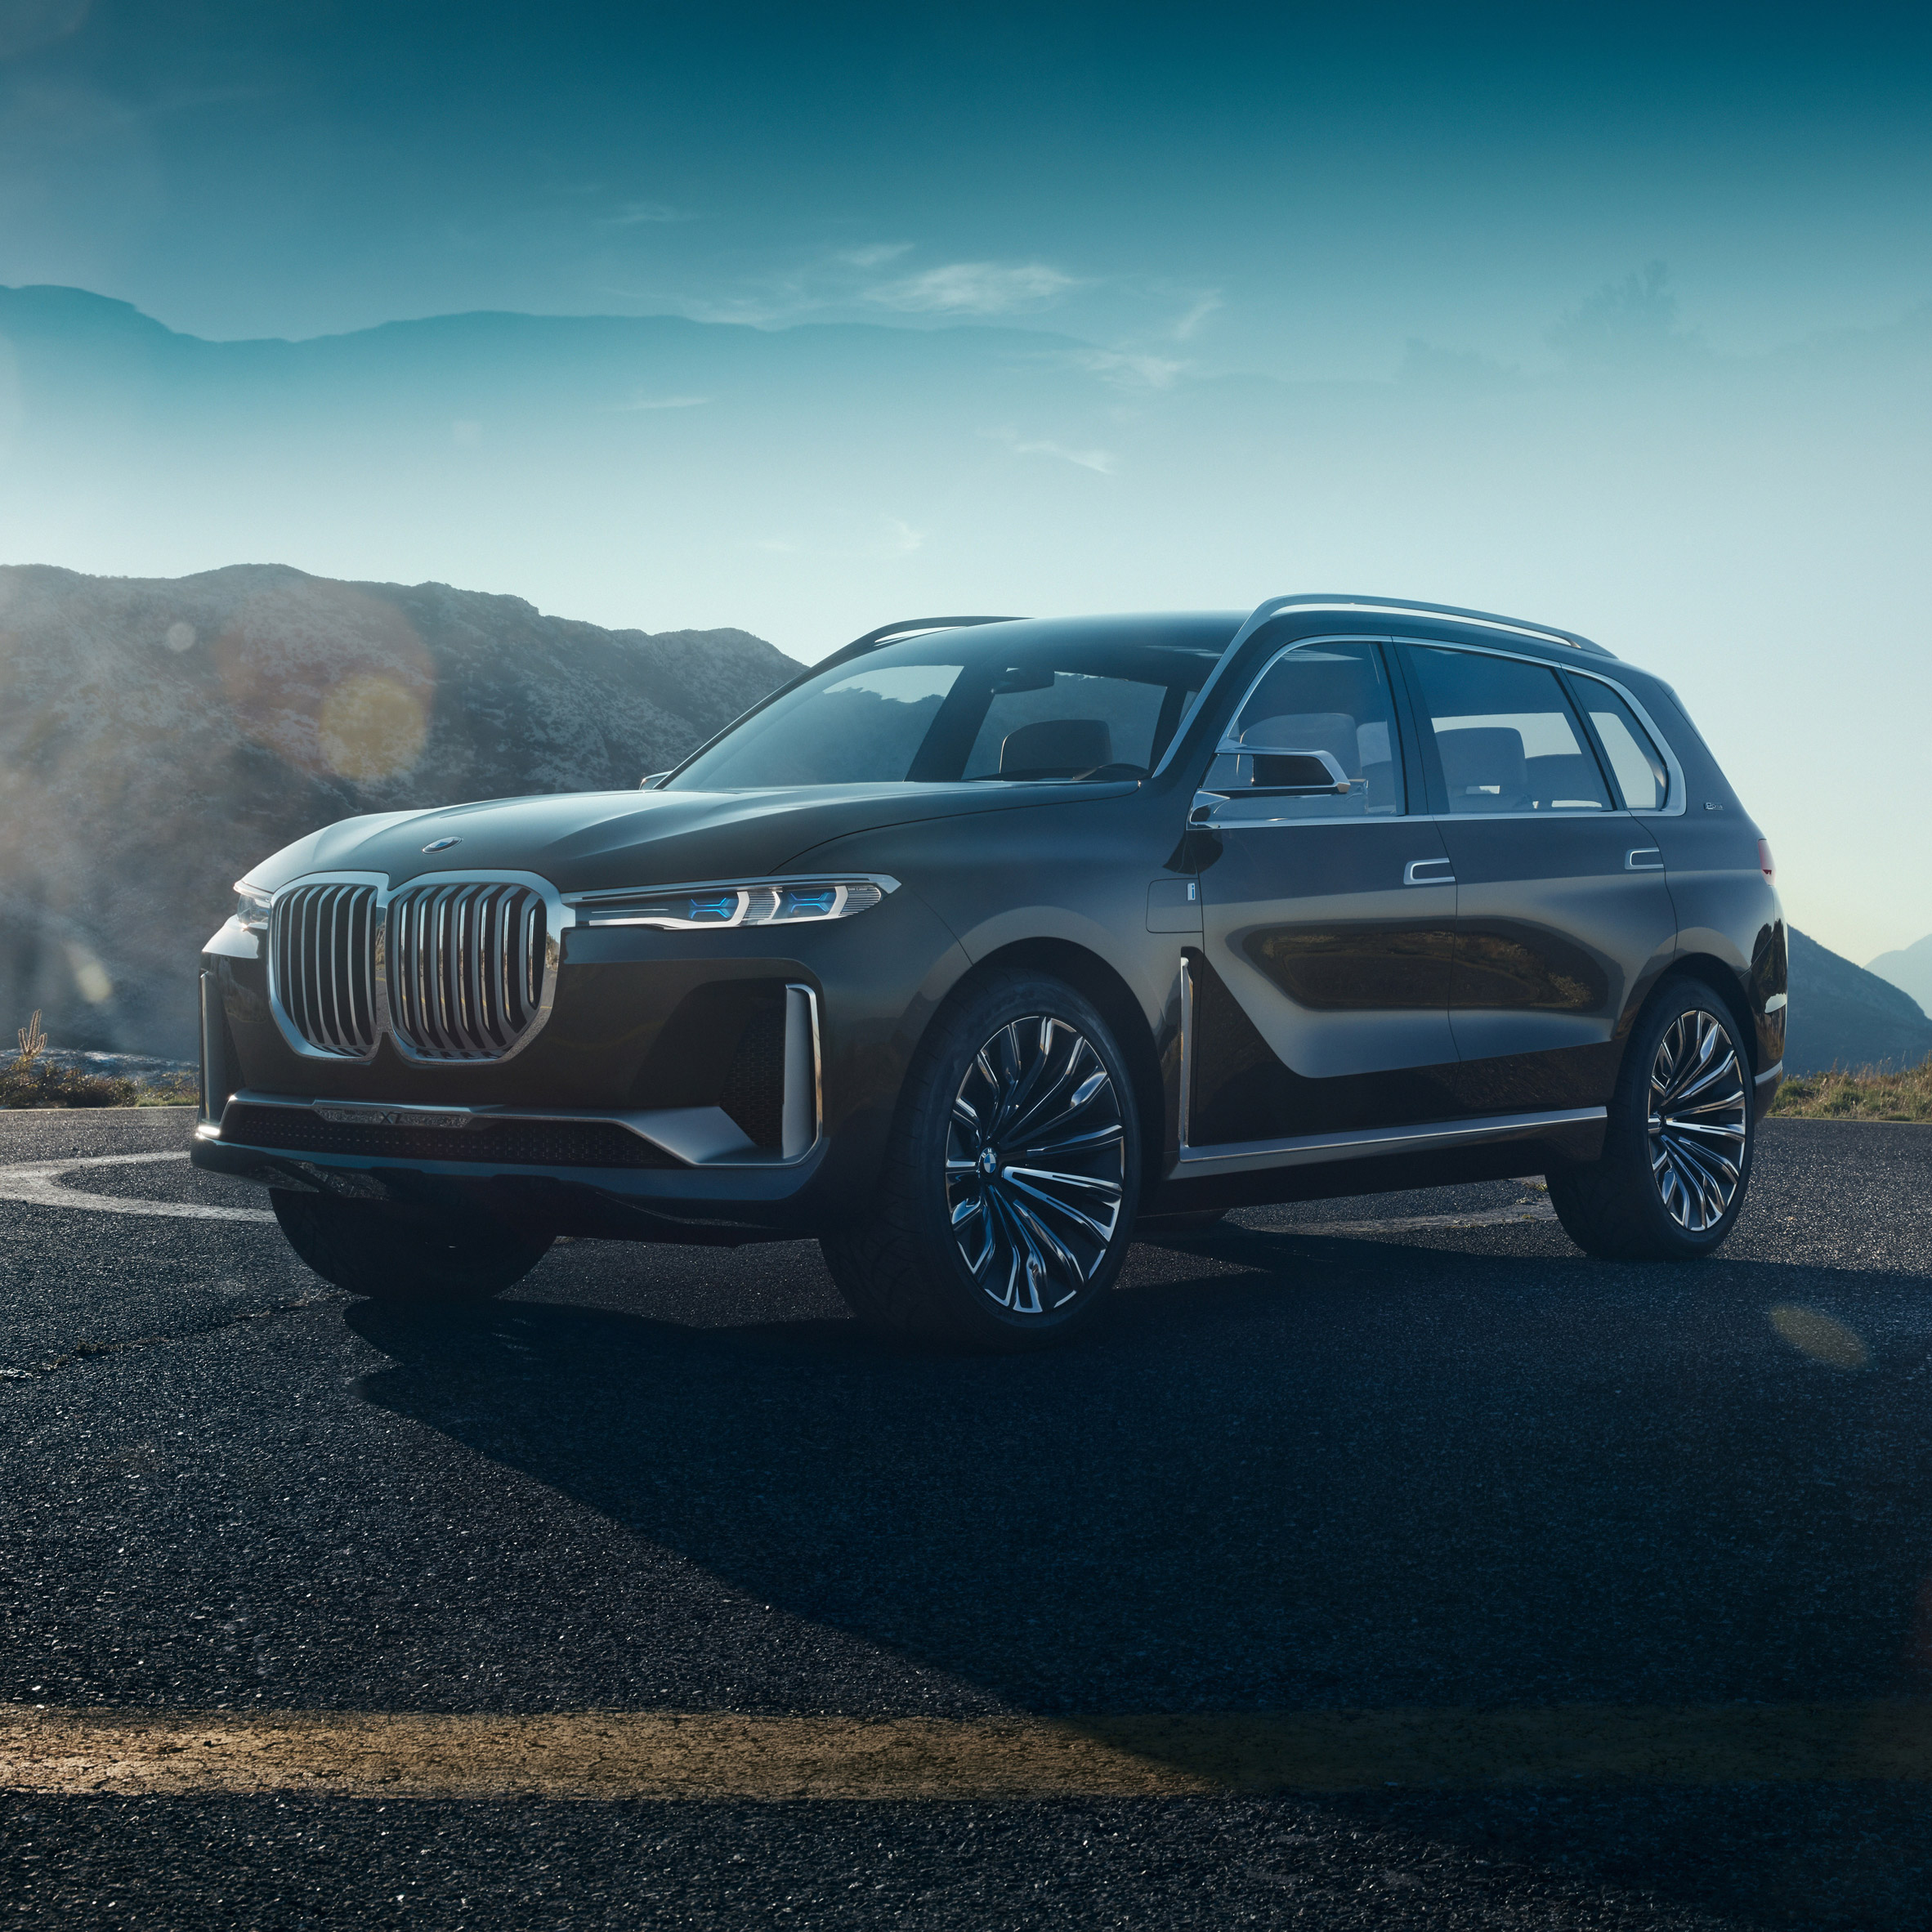 BMW unveils spacious X7 concept car as part of luxury vehicle range-0